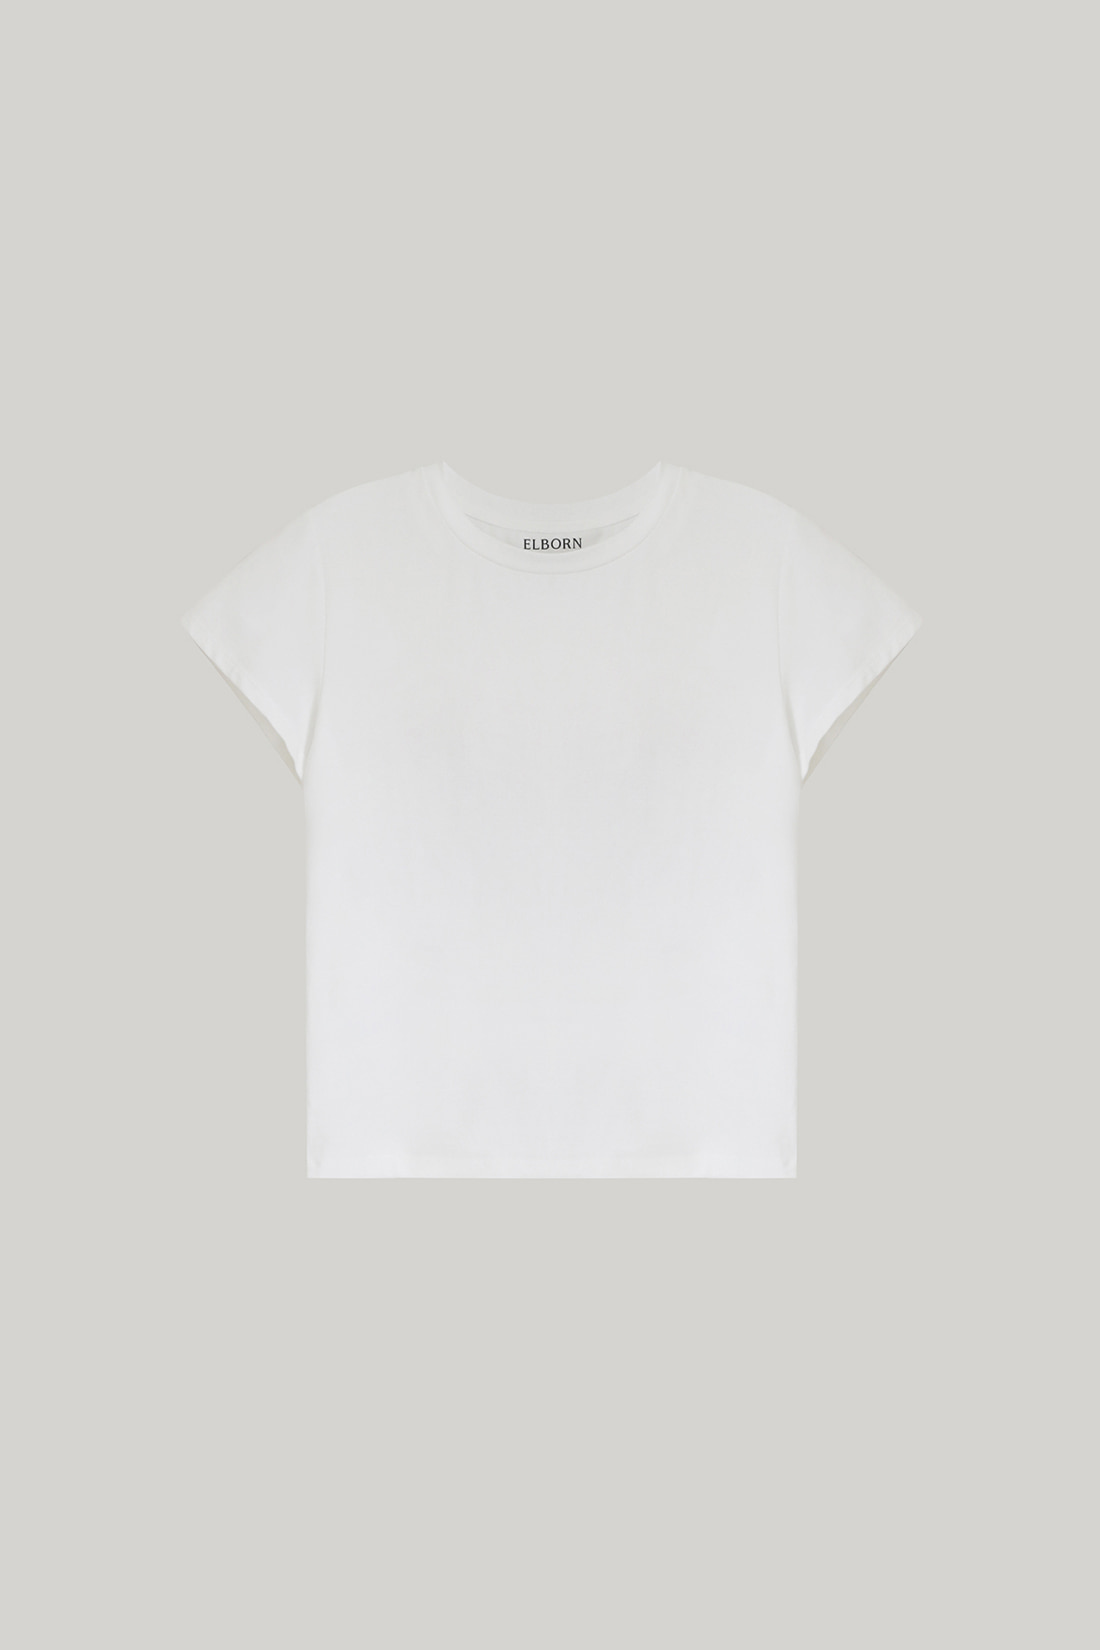 3RD / Damia T-shirt (4colors)